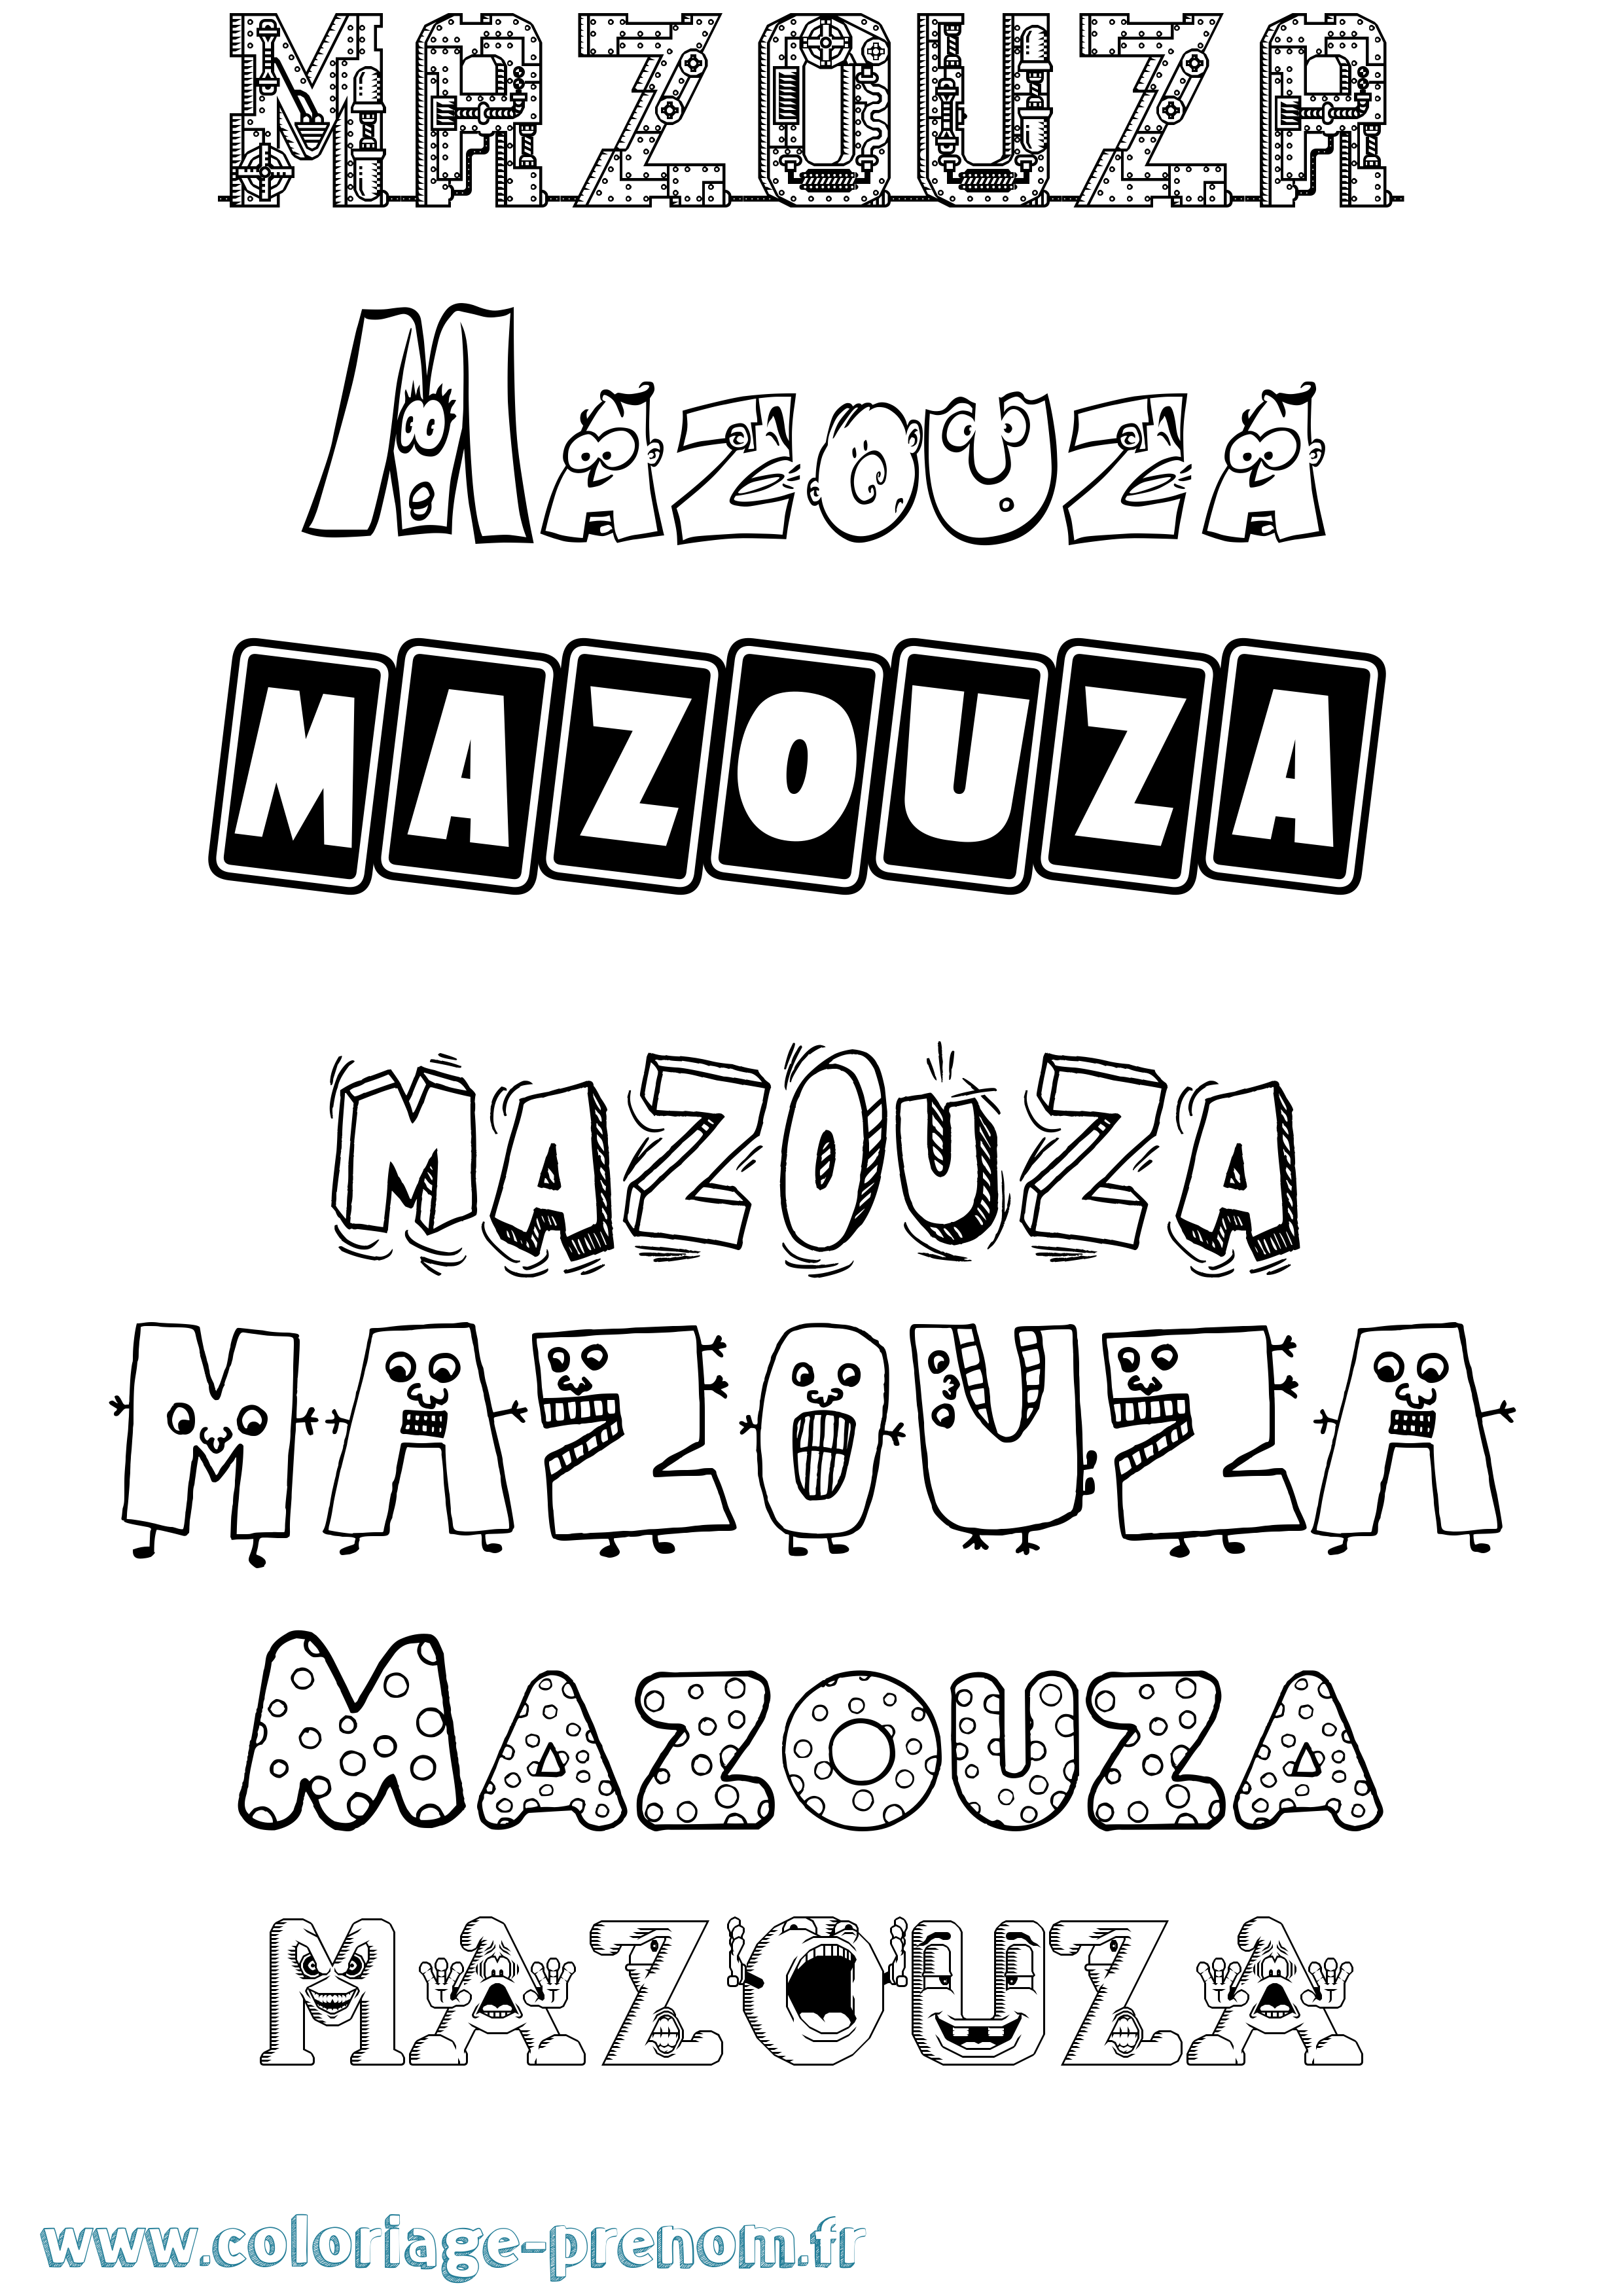 Coloriage prénom Mazouza Fun